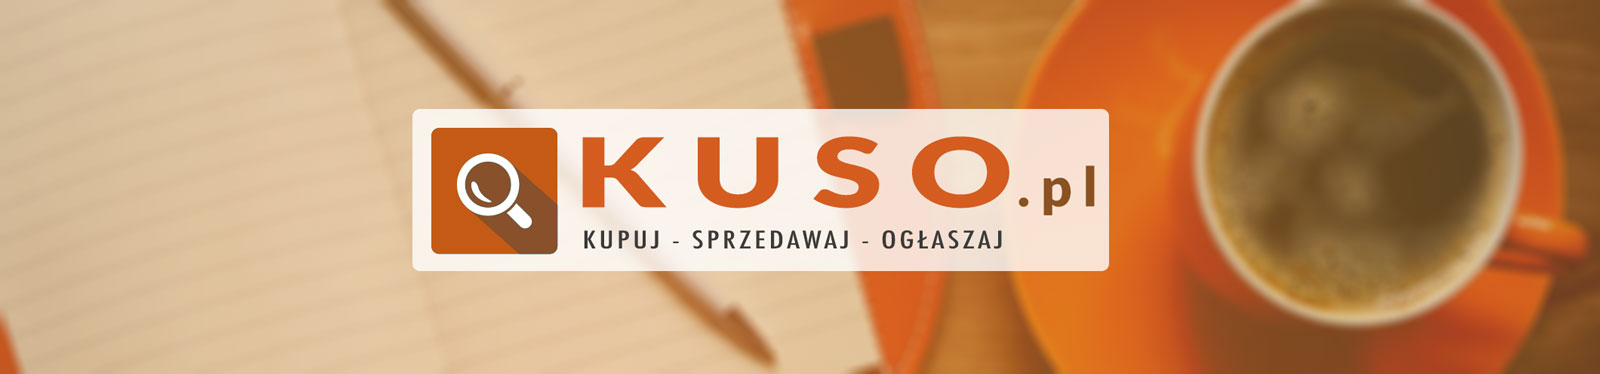 KUSO.pl